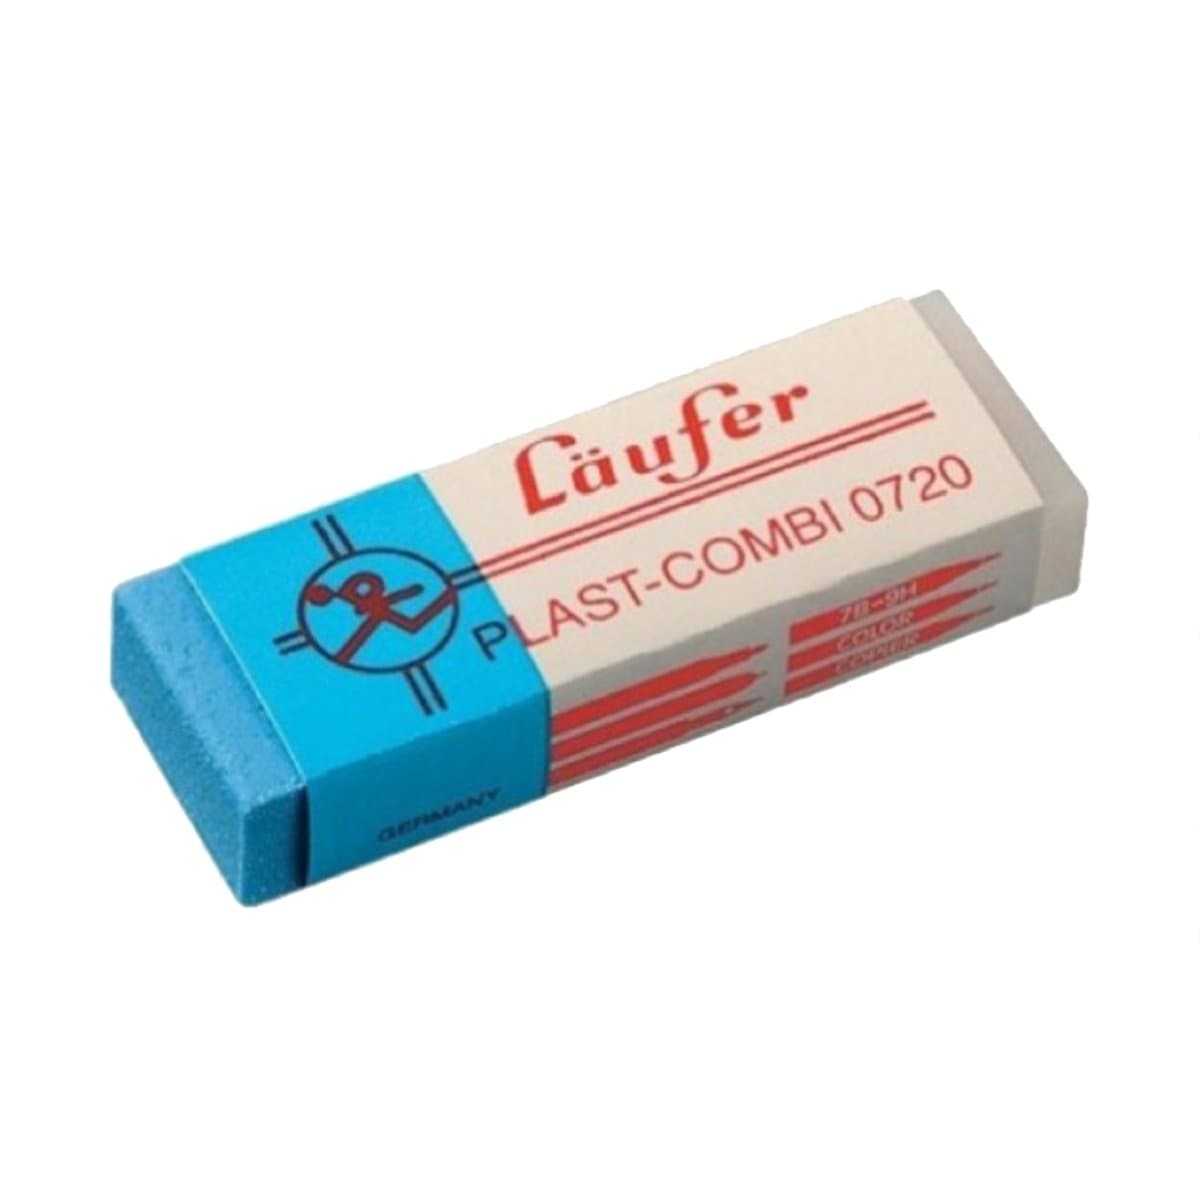 Laufer Plast-Combi 0720 Eraser, Pencils and Crayons, 65x21x12 mm